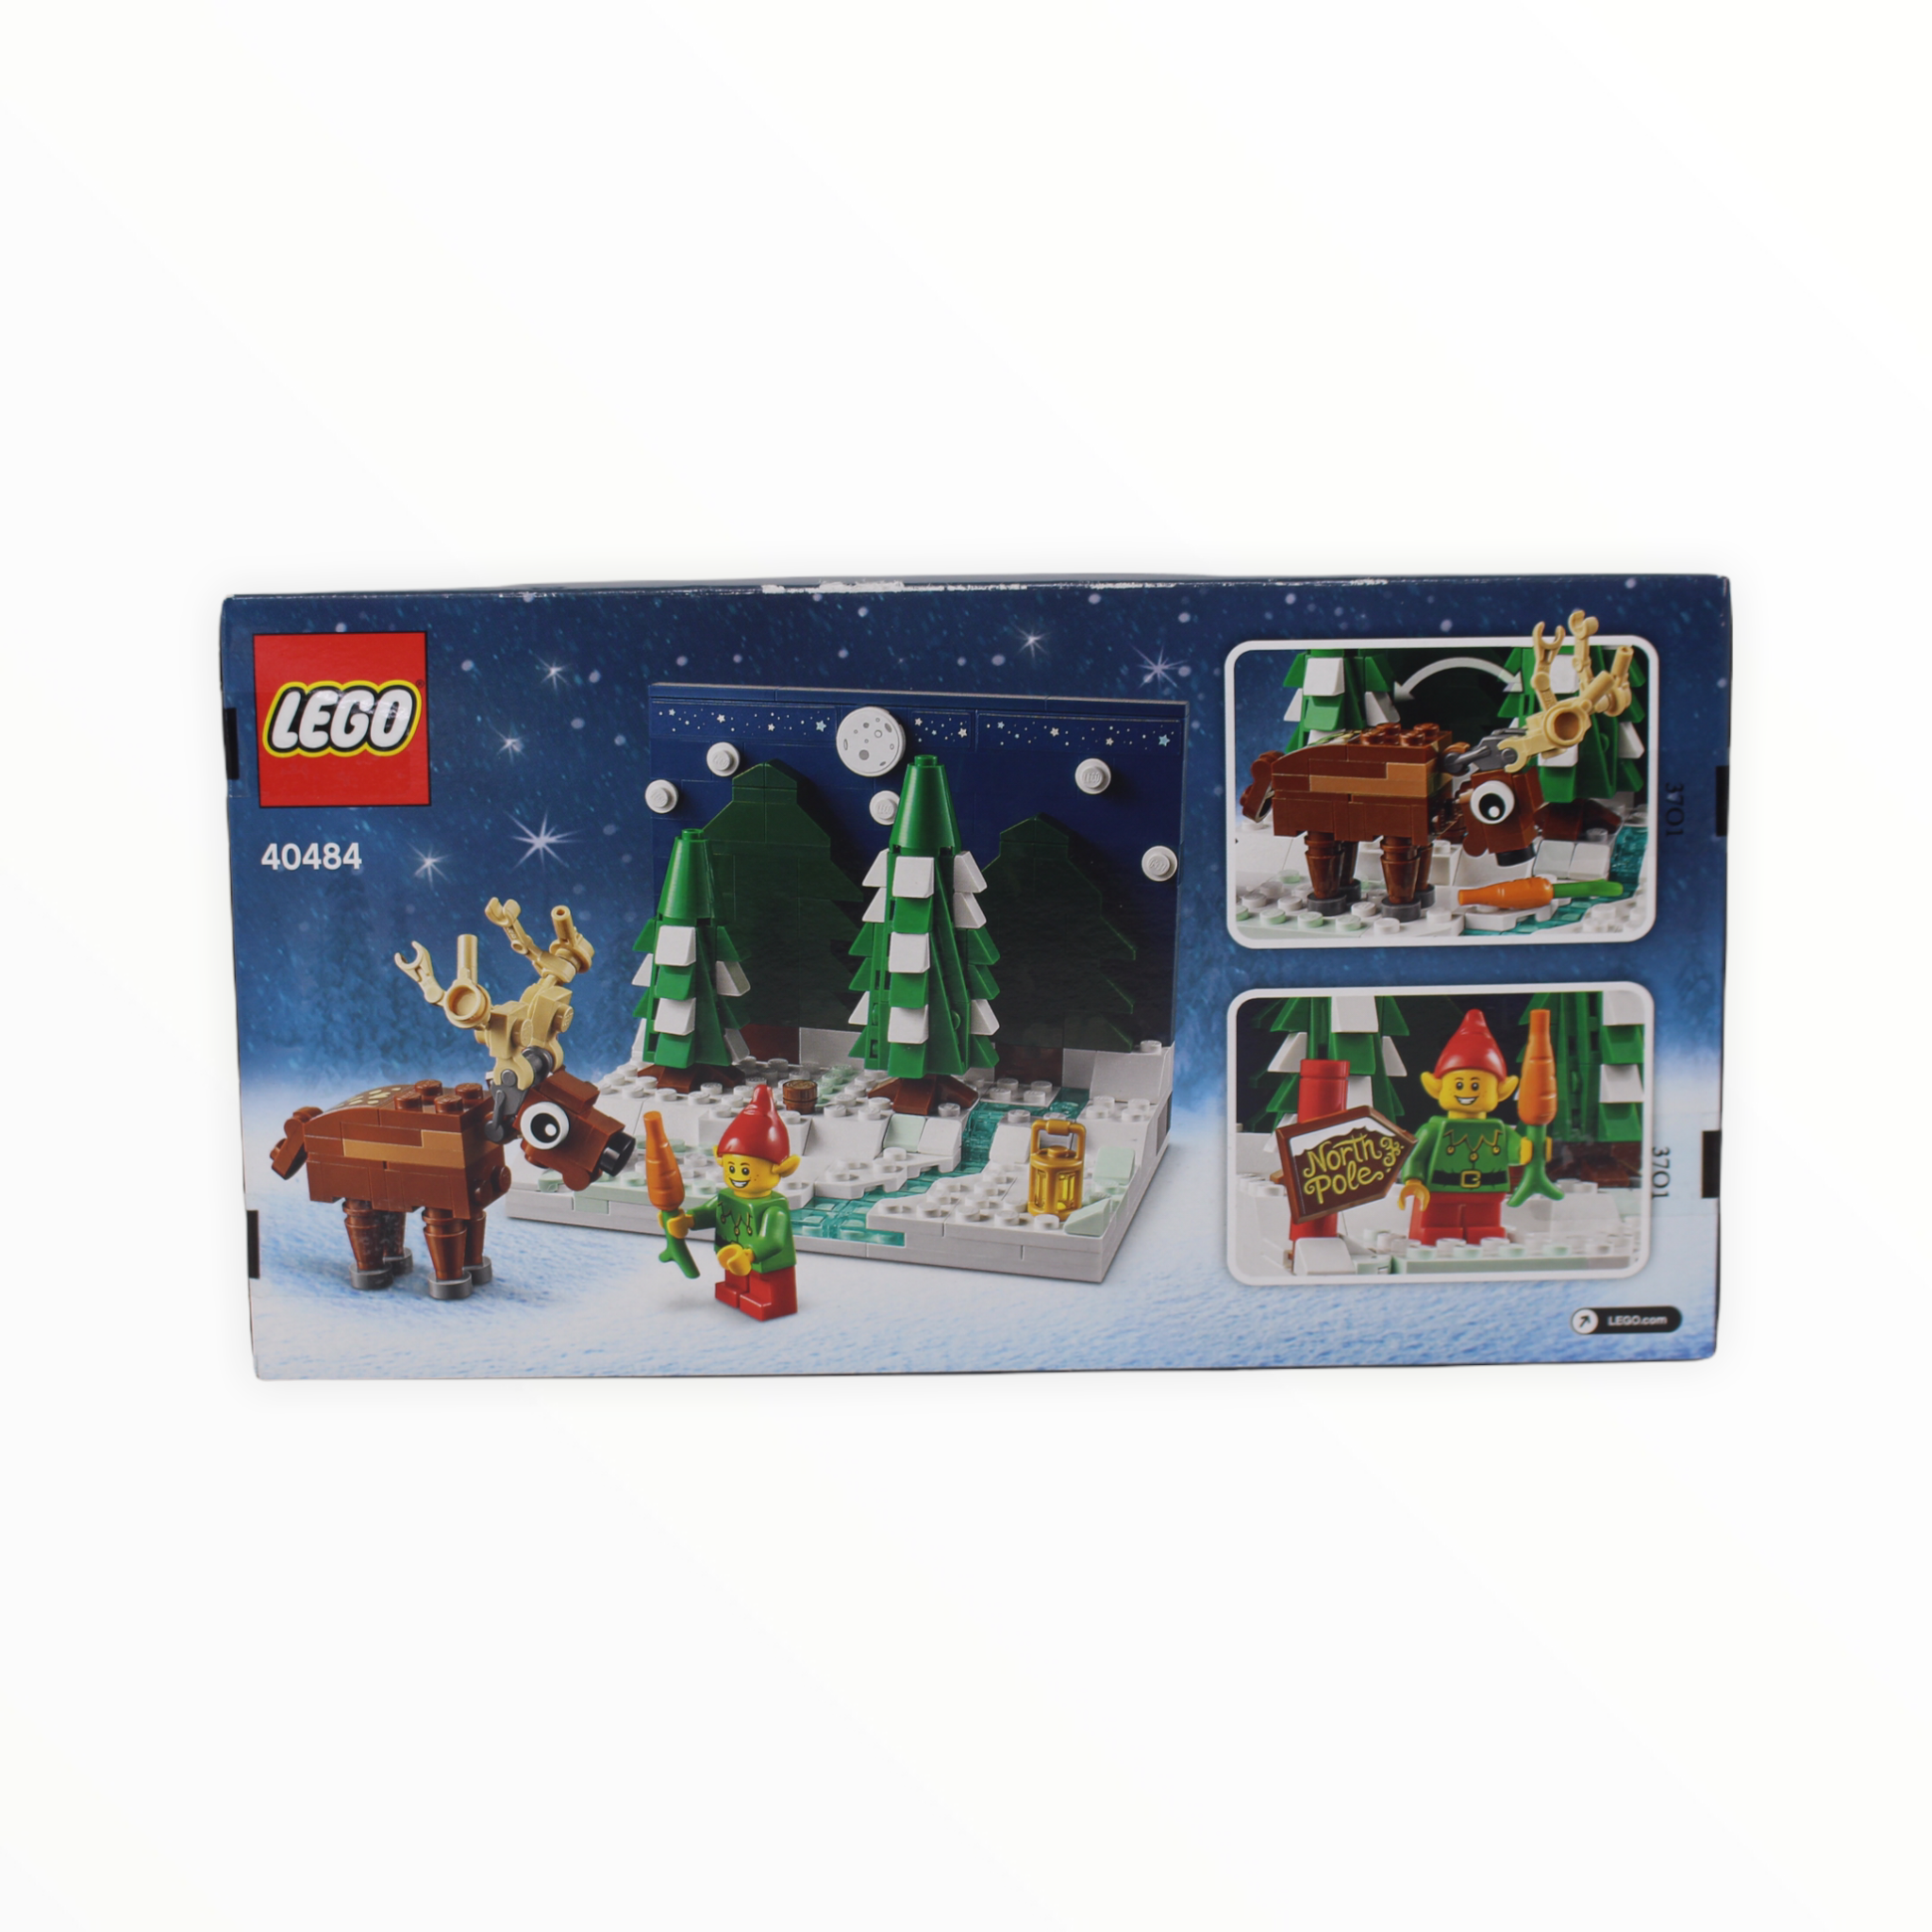 Retired Set 40484 LEGO Santa’s Front Yard